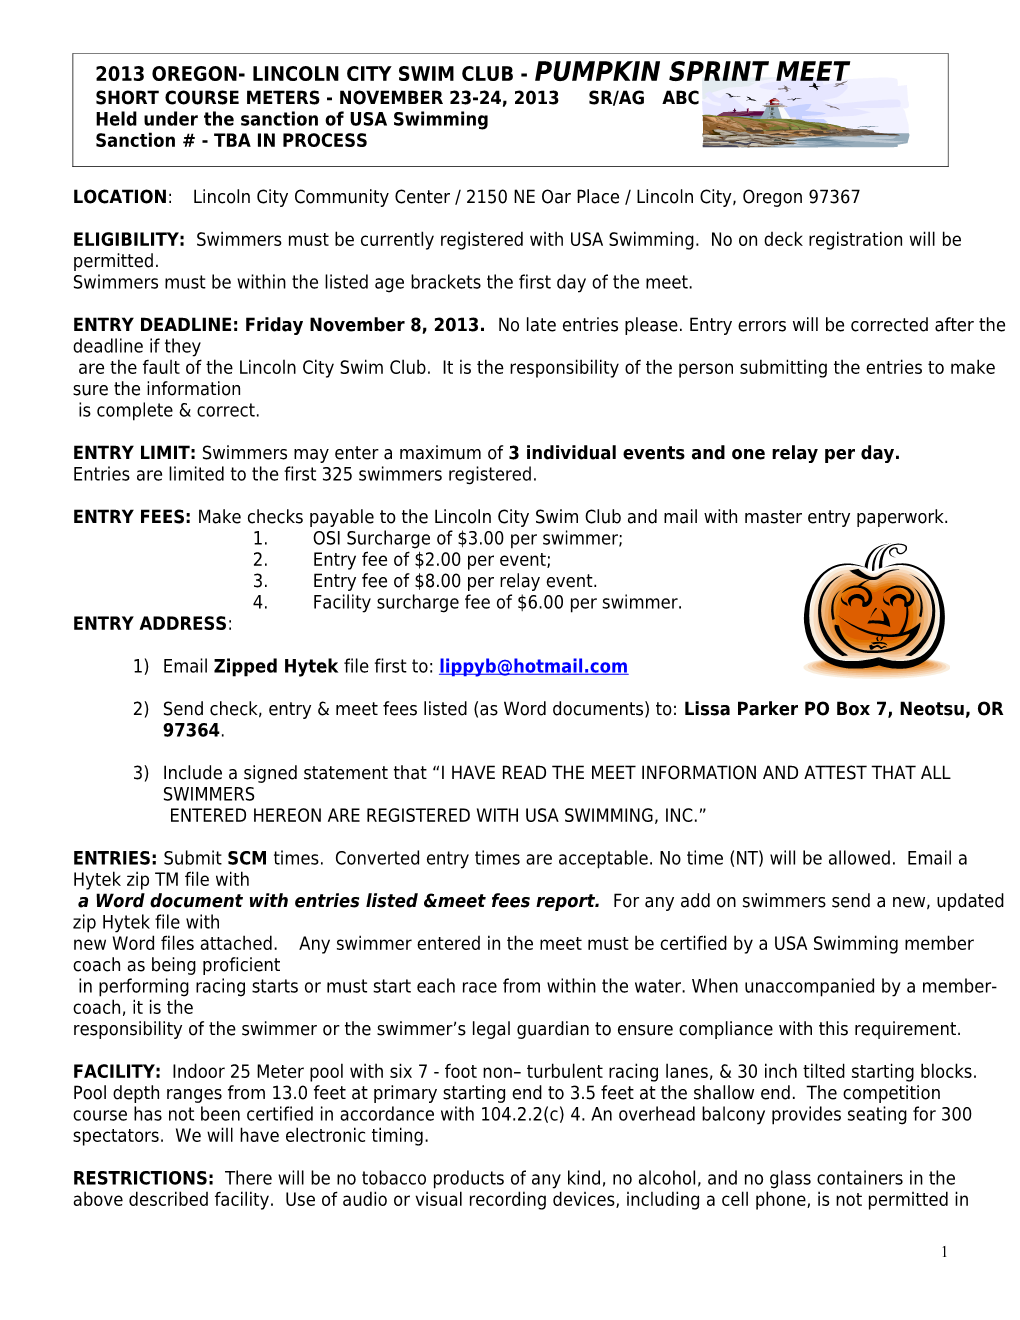 2013 Oregon- Lincoln City Swim Club -Pumpkin Sprint Meet